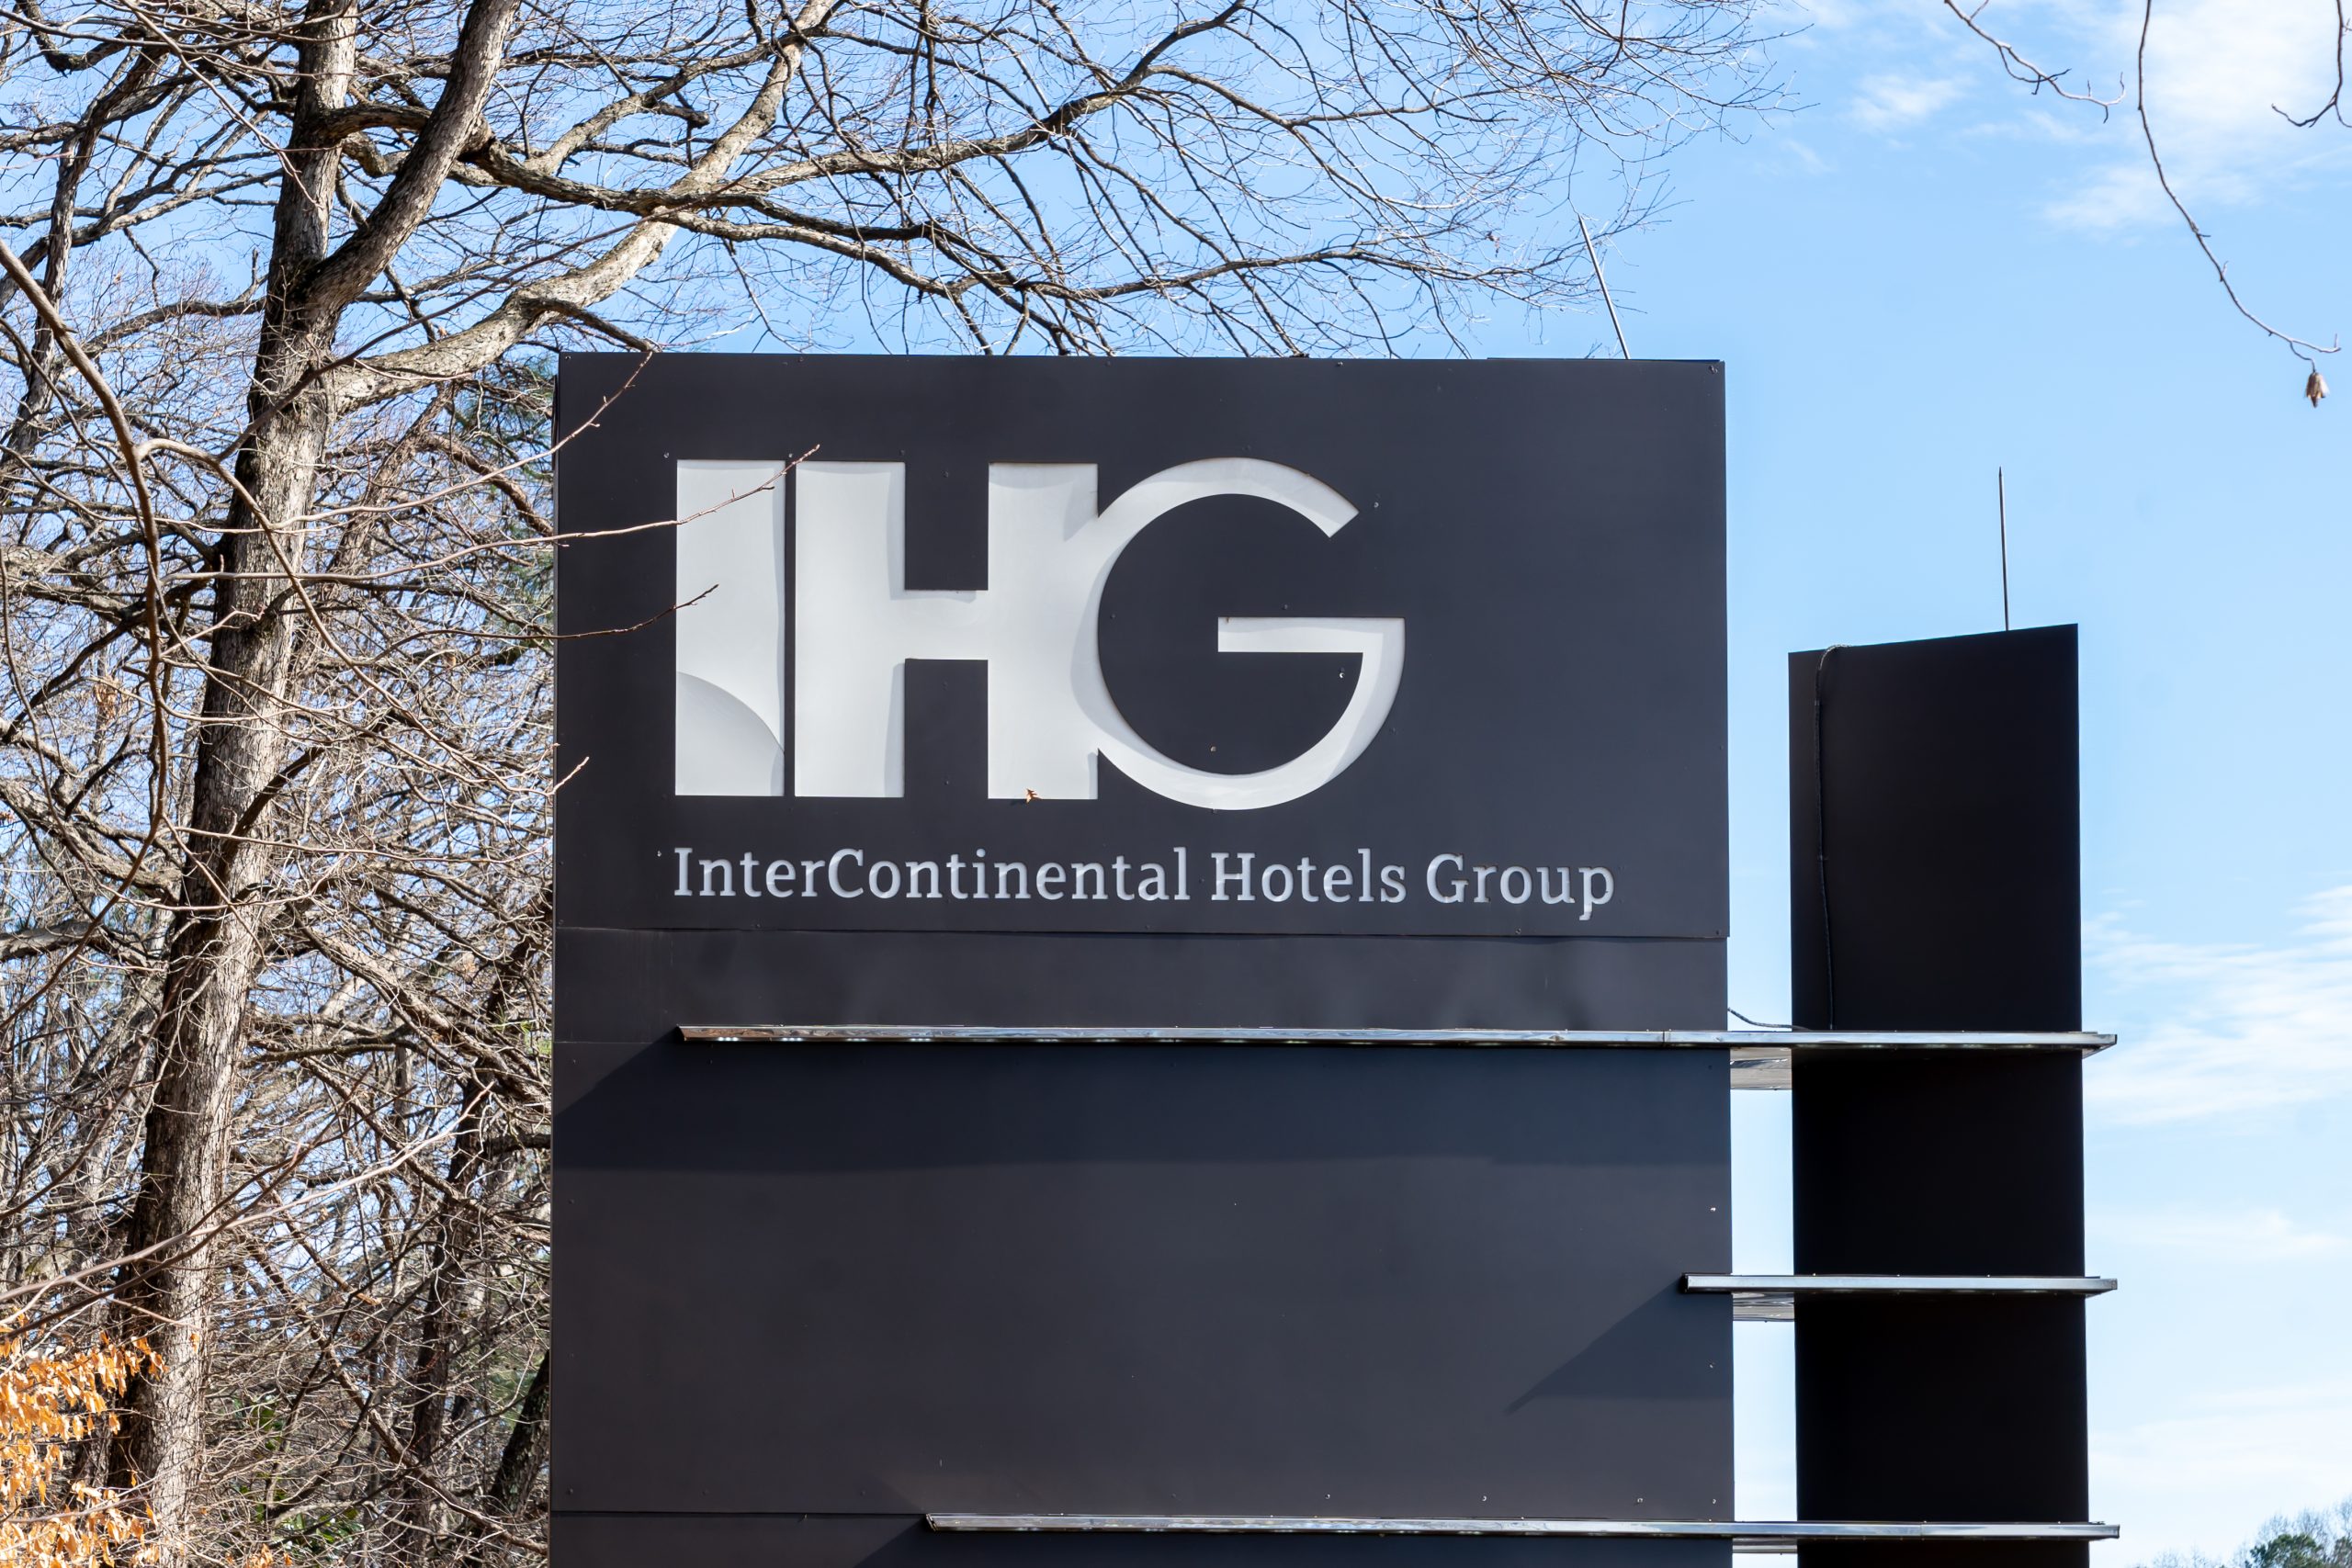 IHG hotel chain